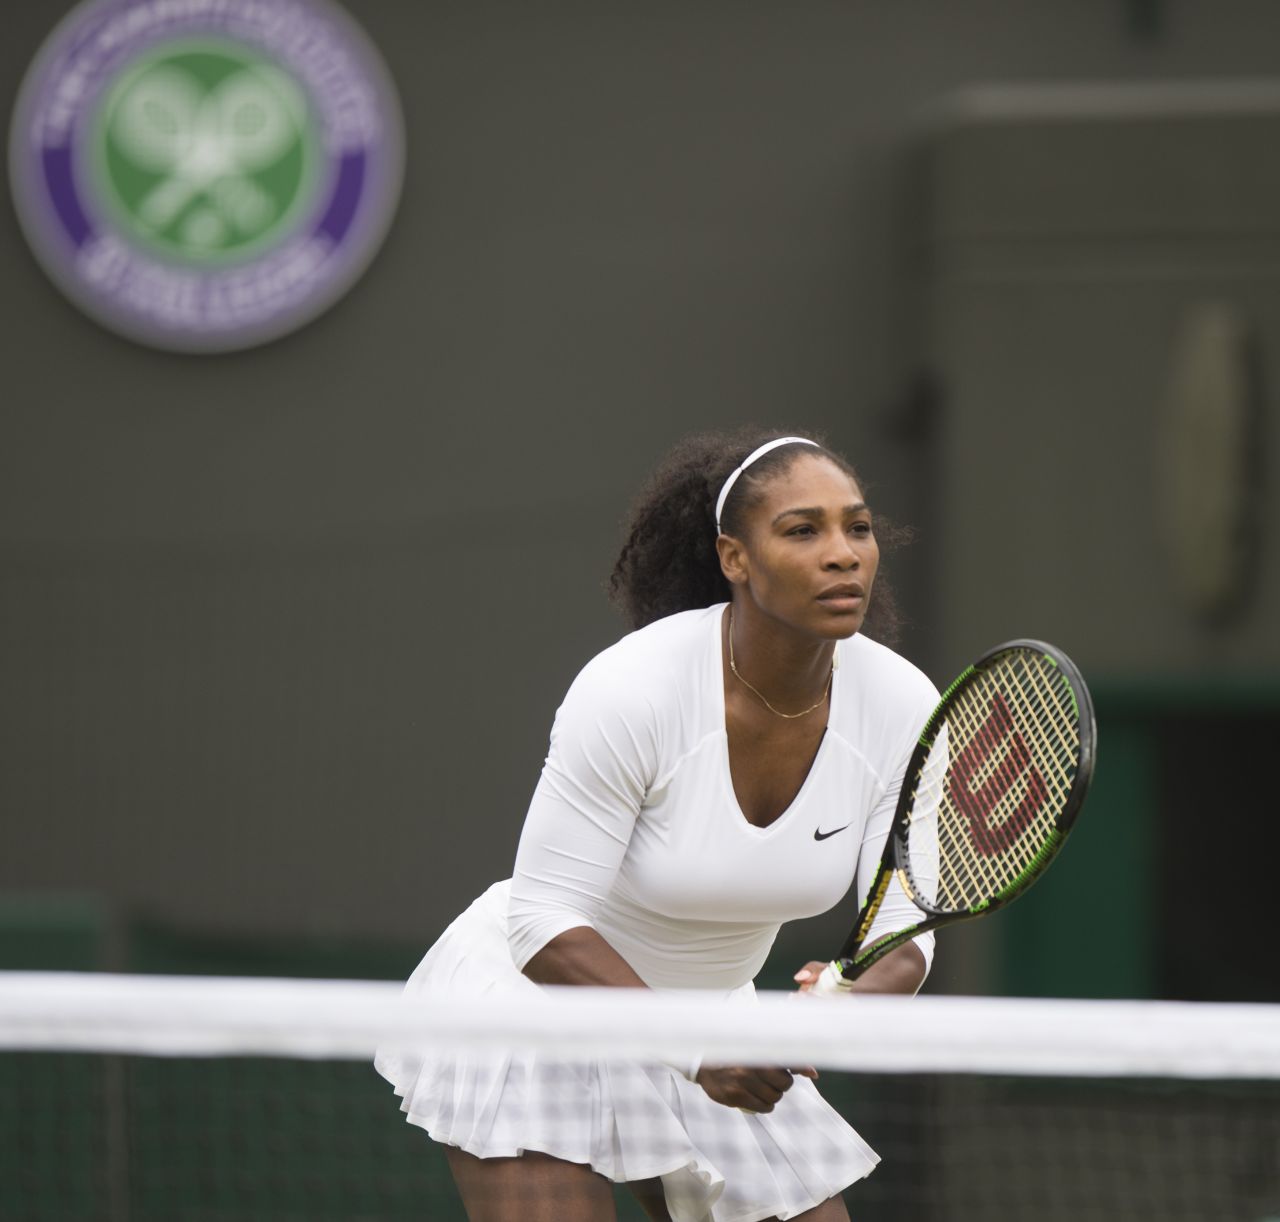 Serena & Venus Williams - Doubles semi Final Match in Wimbledon 7/8/20161280 x 1222